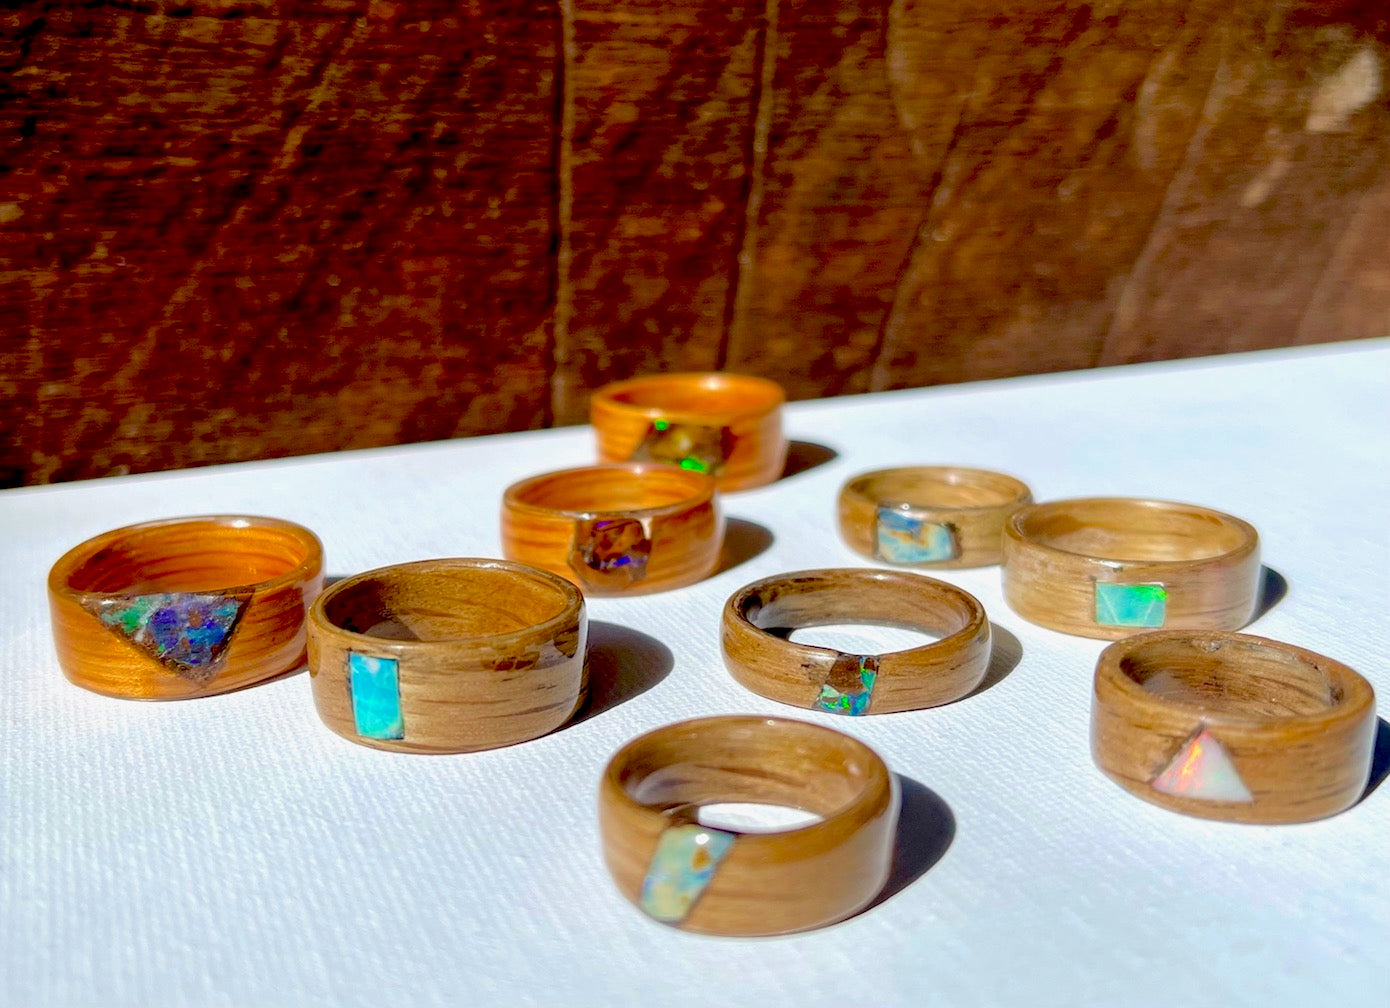 9 Lincoln St Bent Wood Boulder Opal Ring Size 7